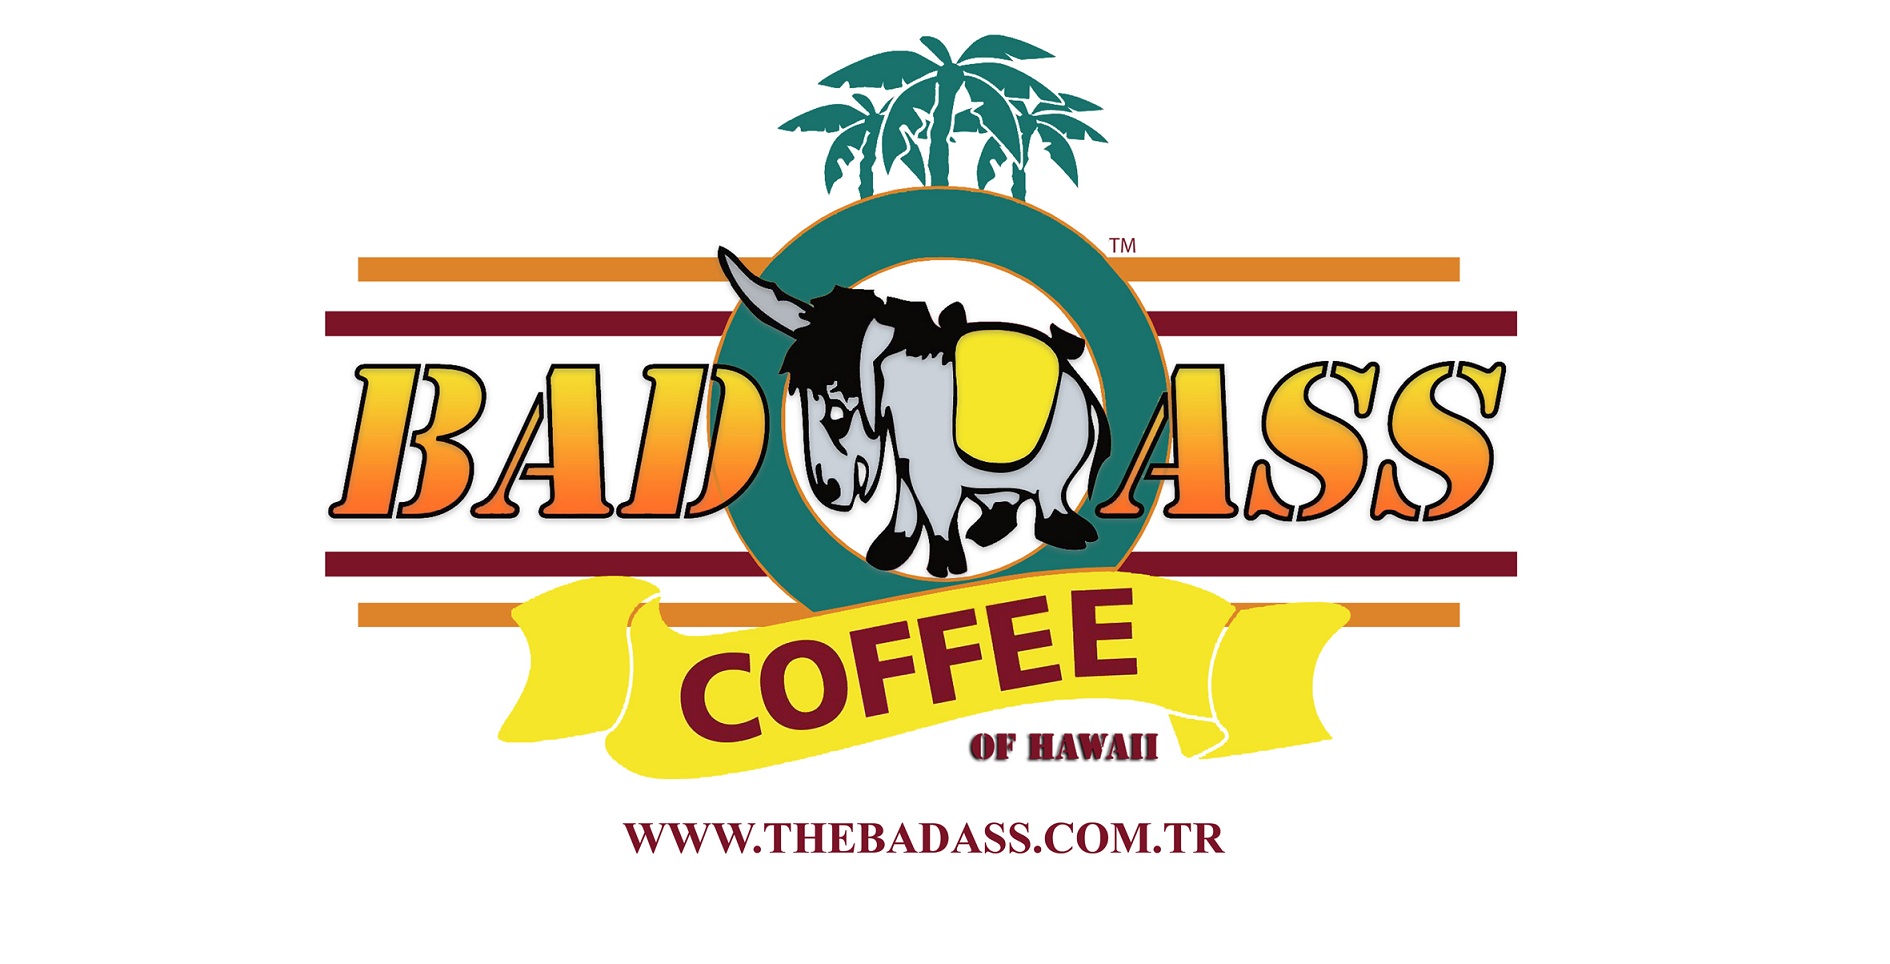 THE BAD ASS COFFEE